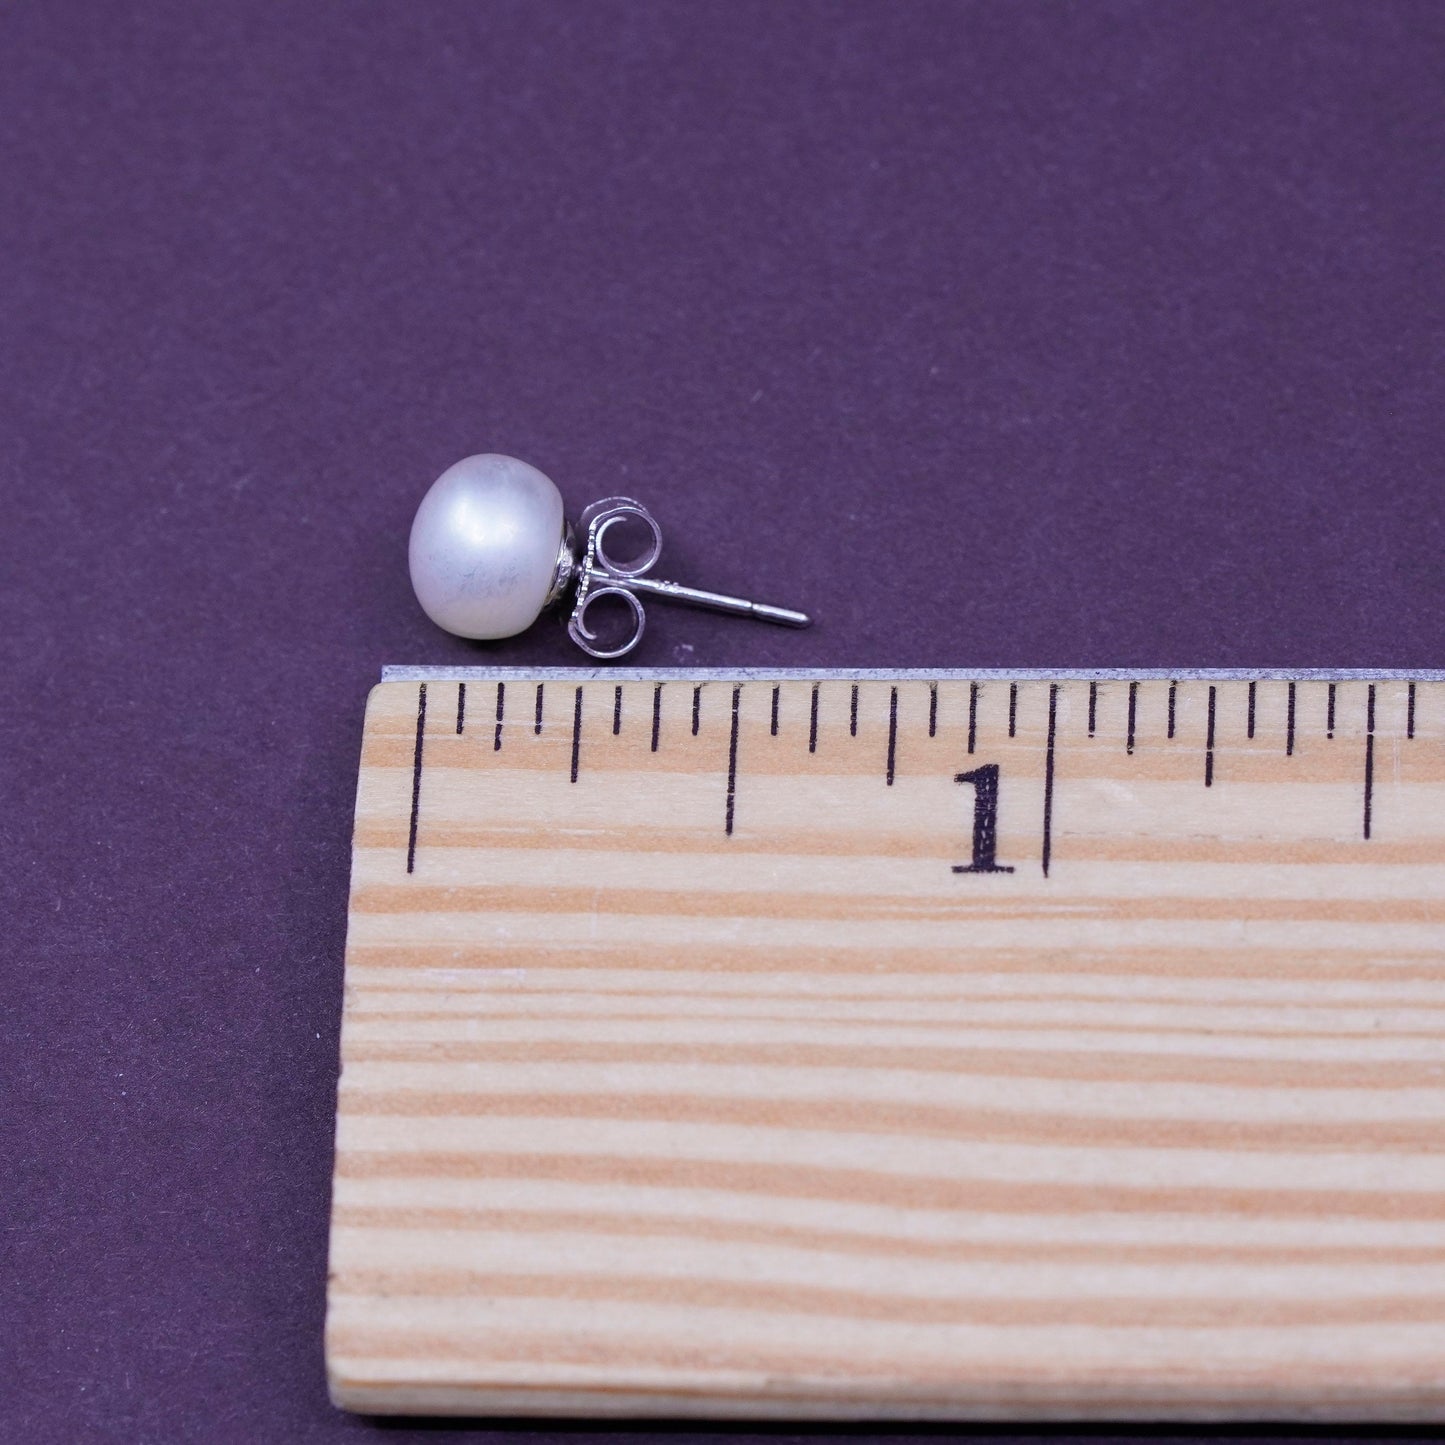 Vintage Sterling silver handmade earrings, 925 silver studs with pearl